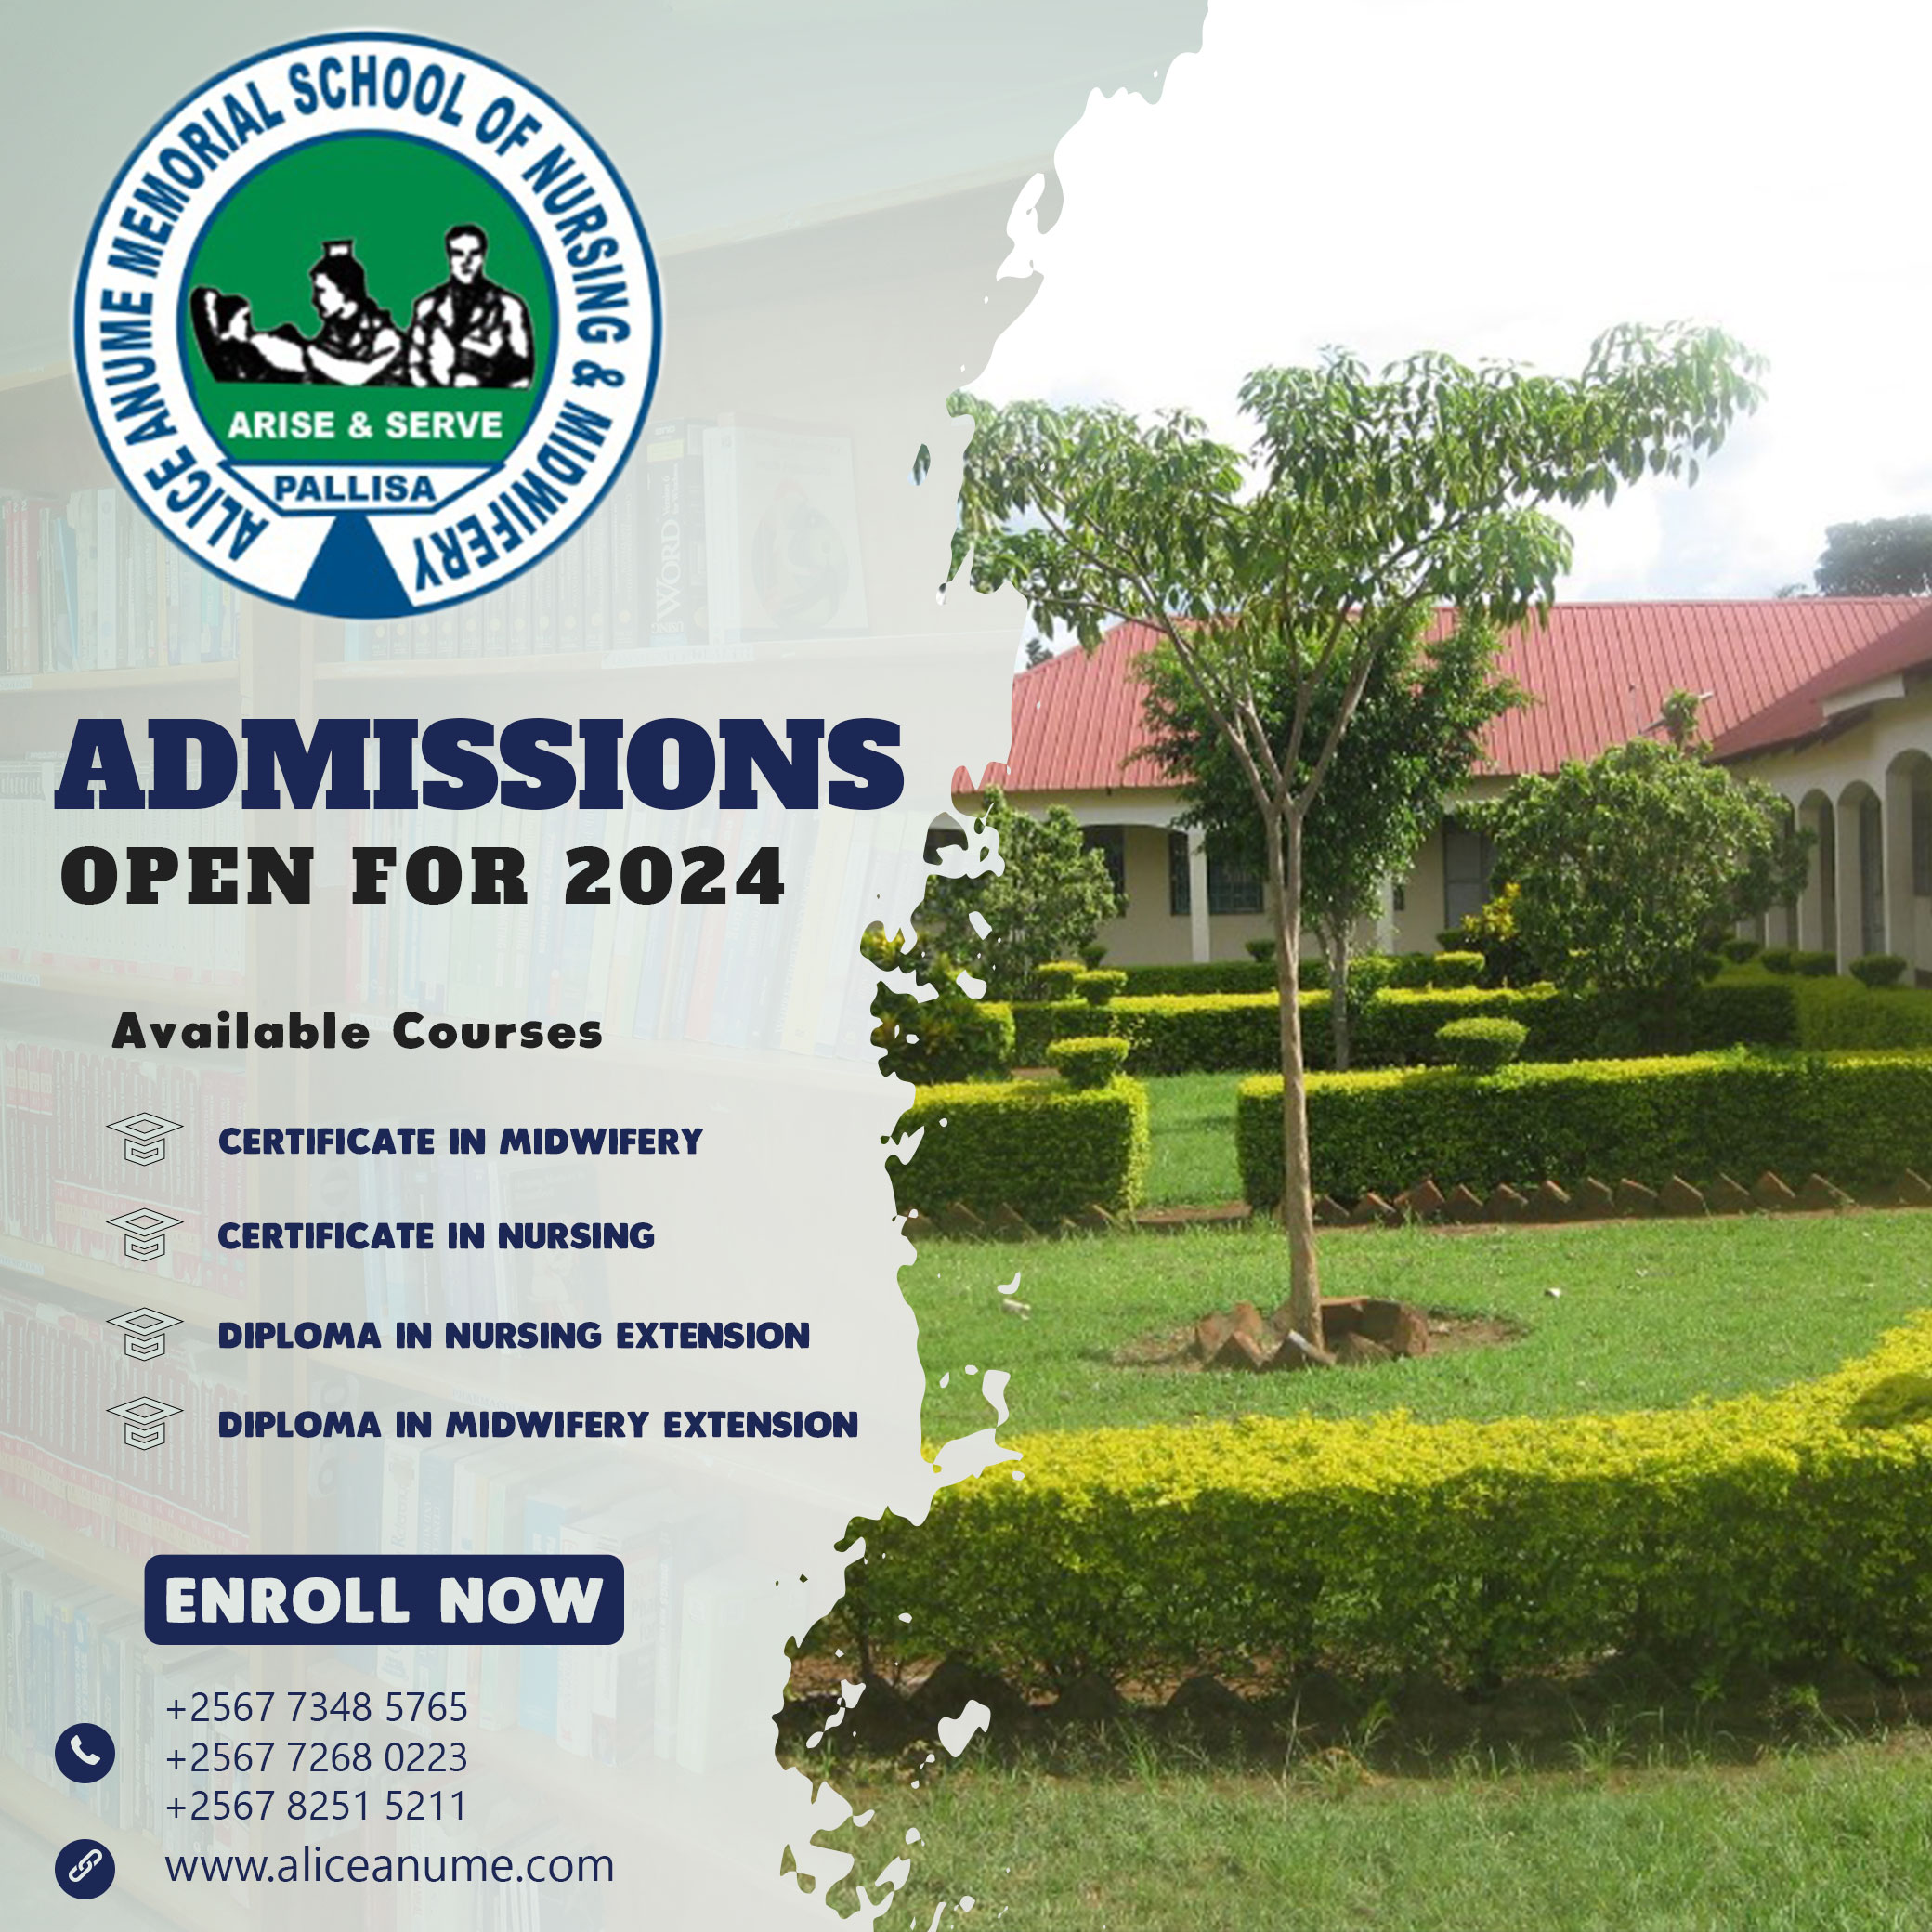 school-admission-advert-image